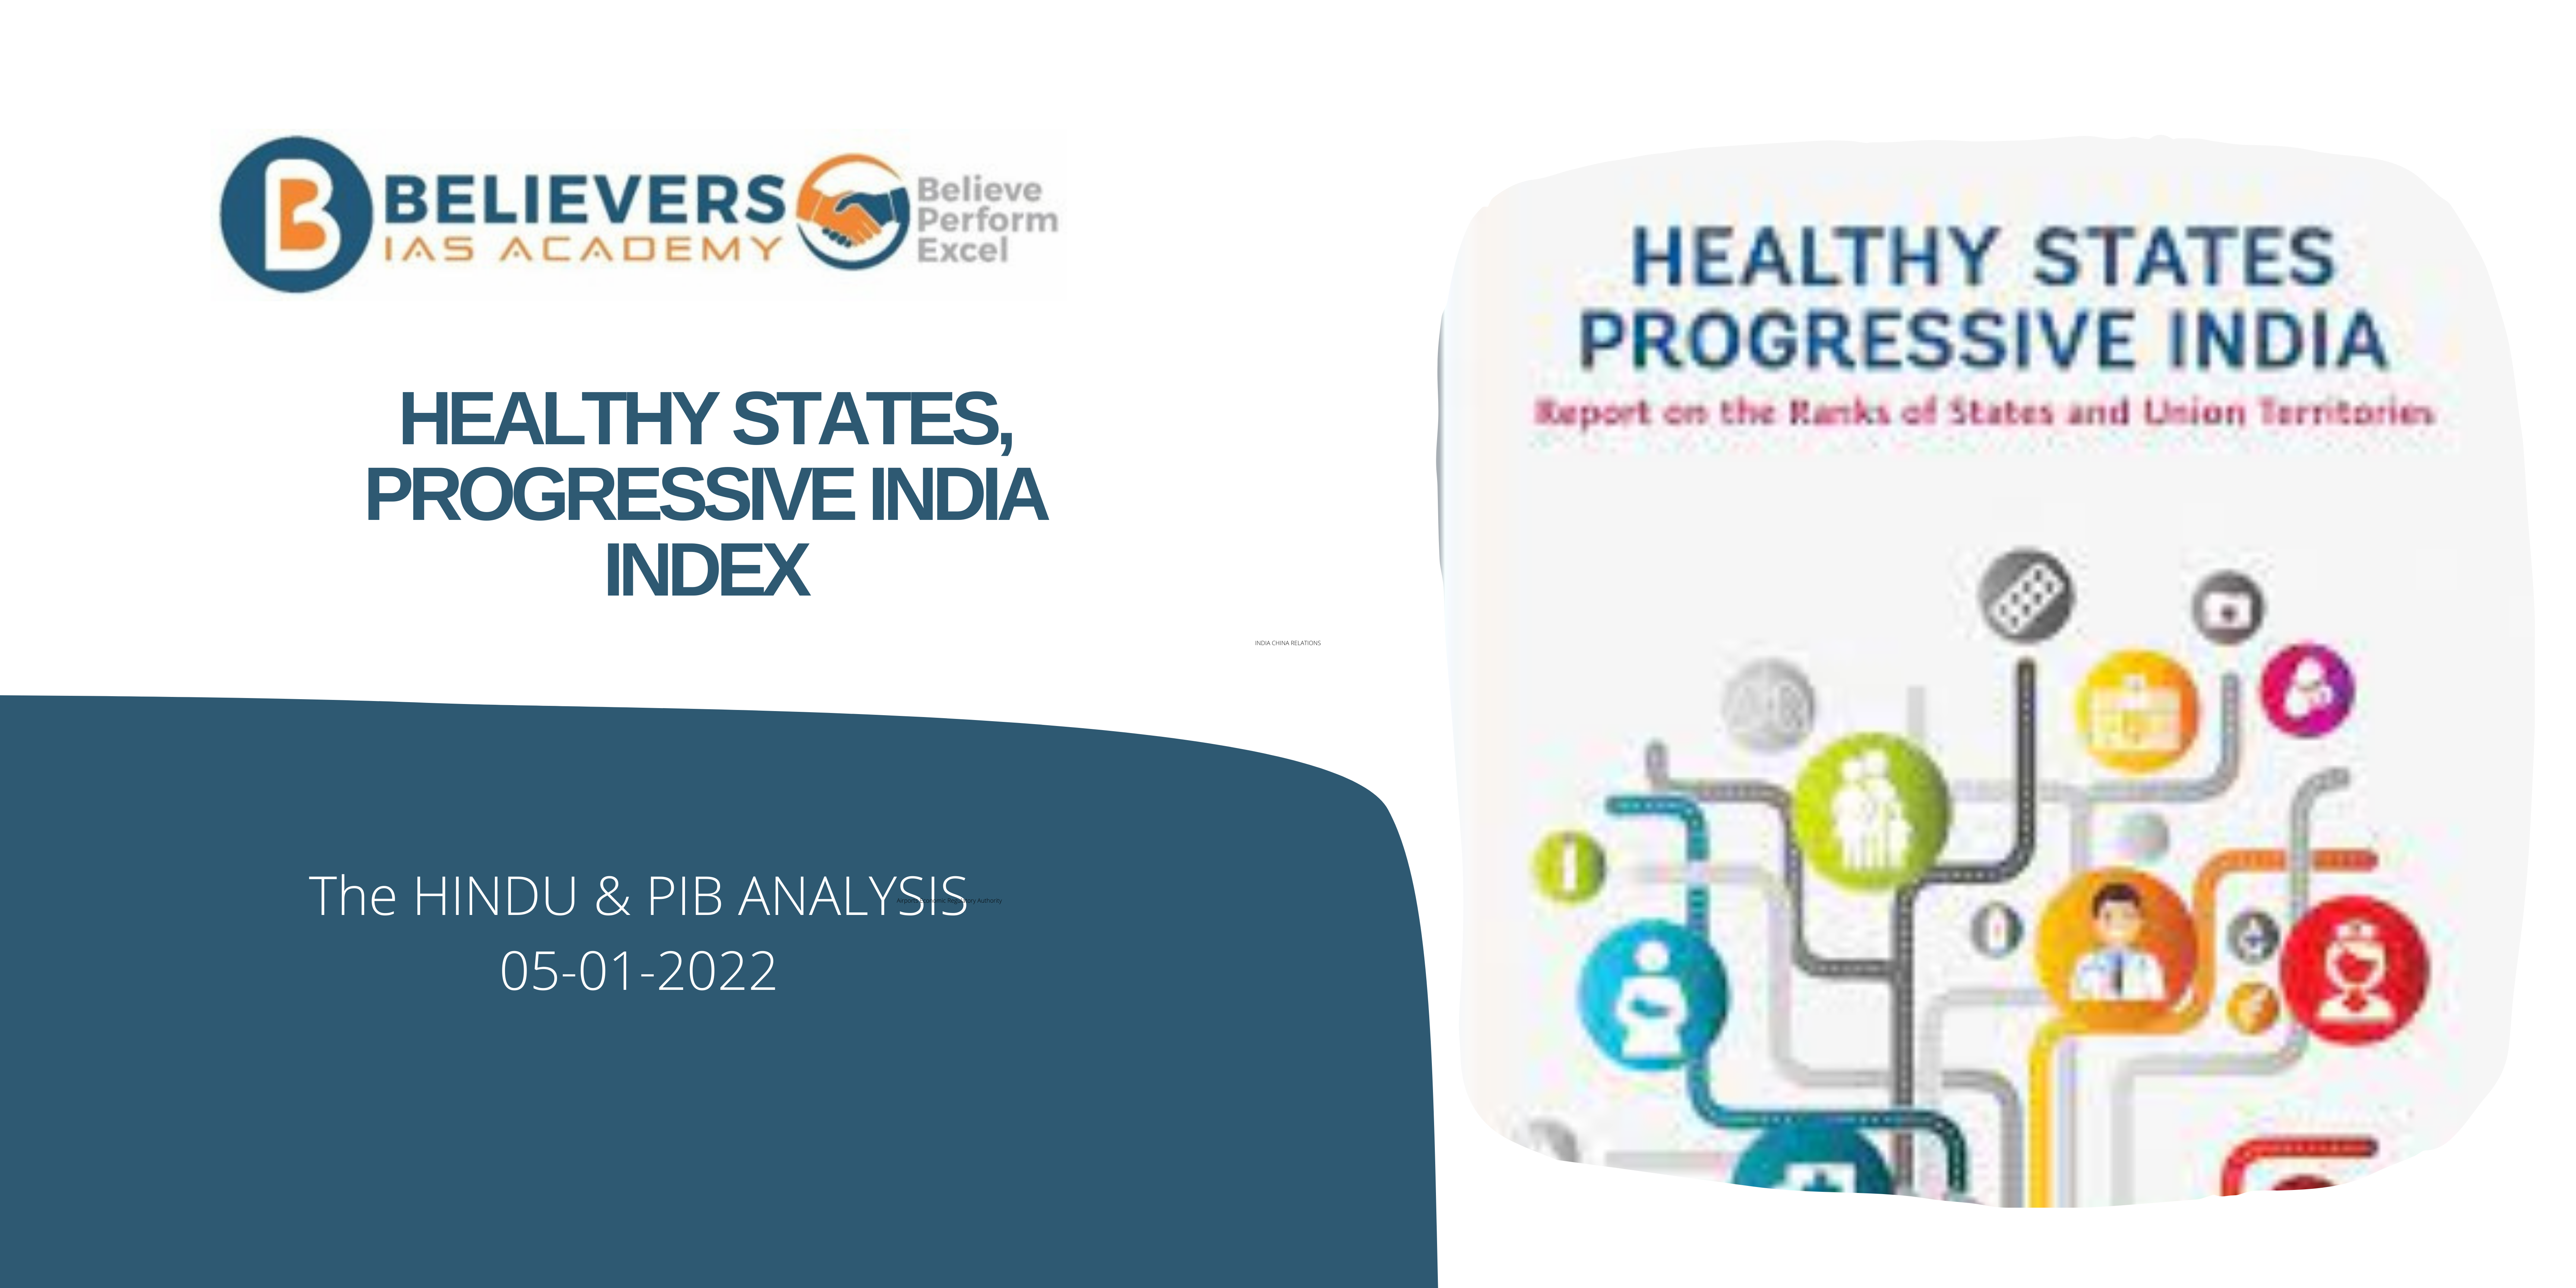 Civil services Current affairs - HEALTHY STATES, PROGRESSIVE INDIA INDEX